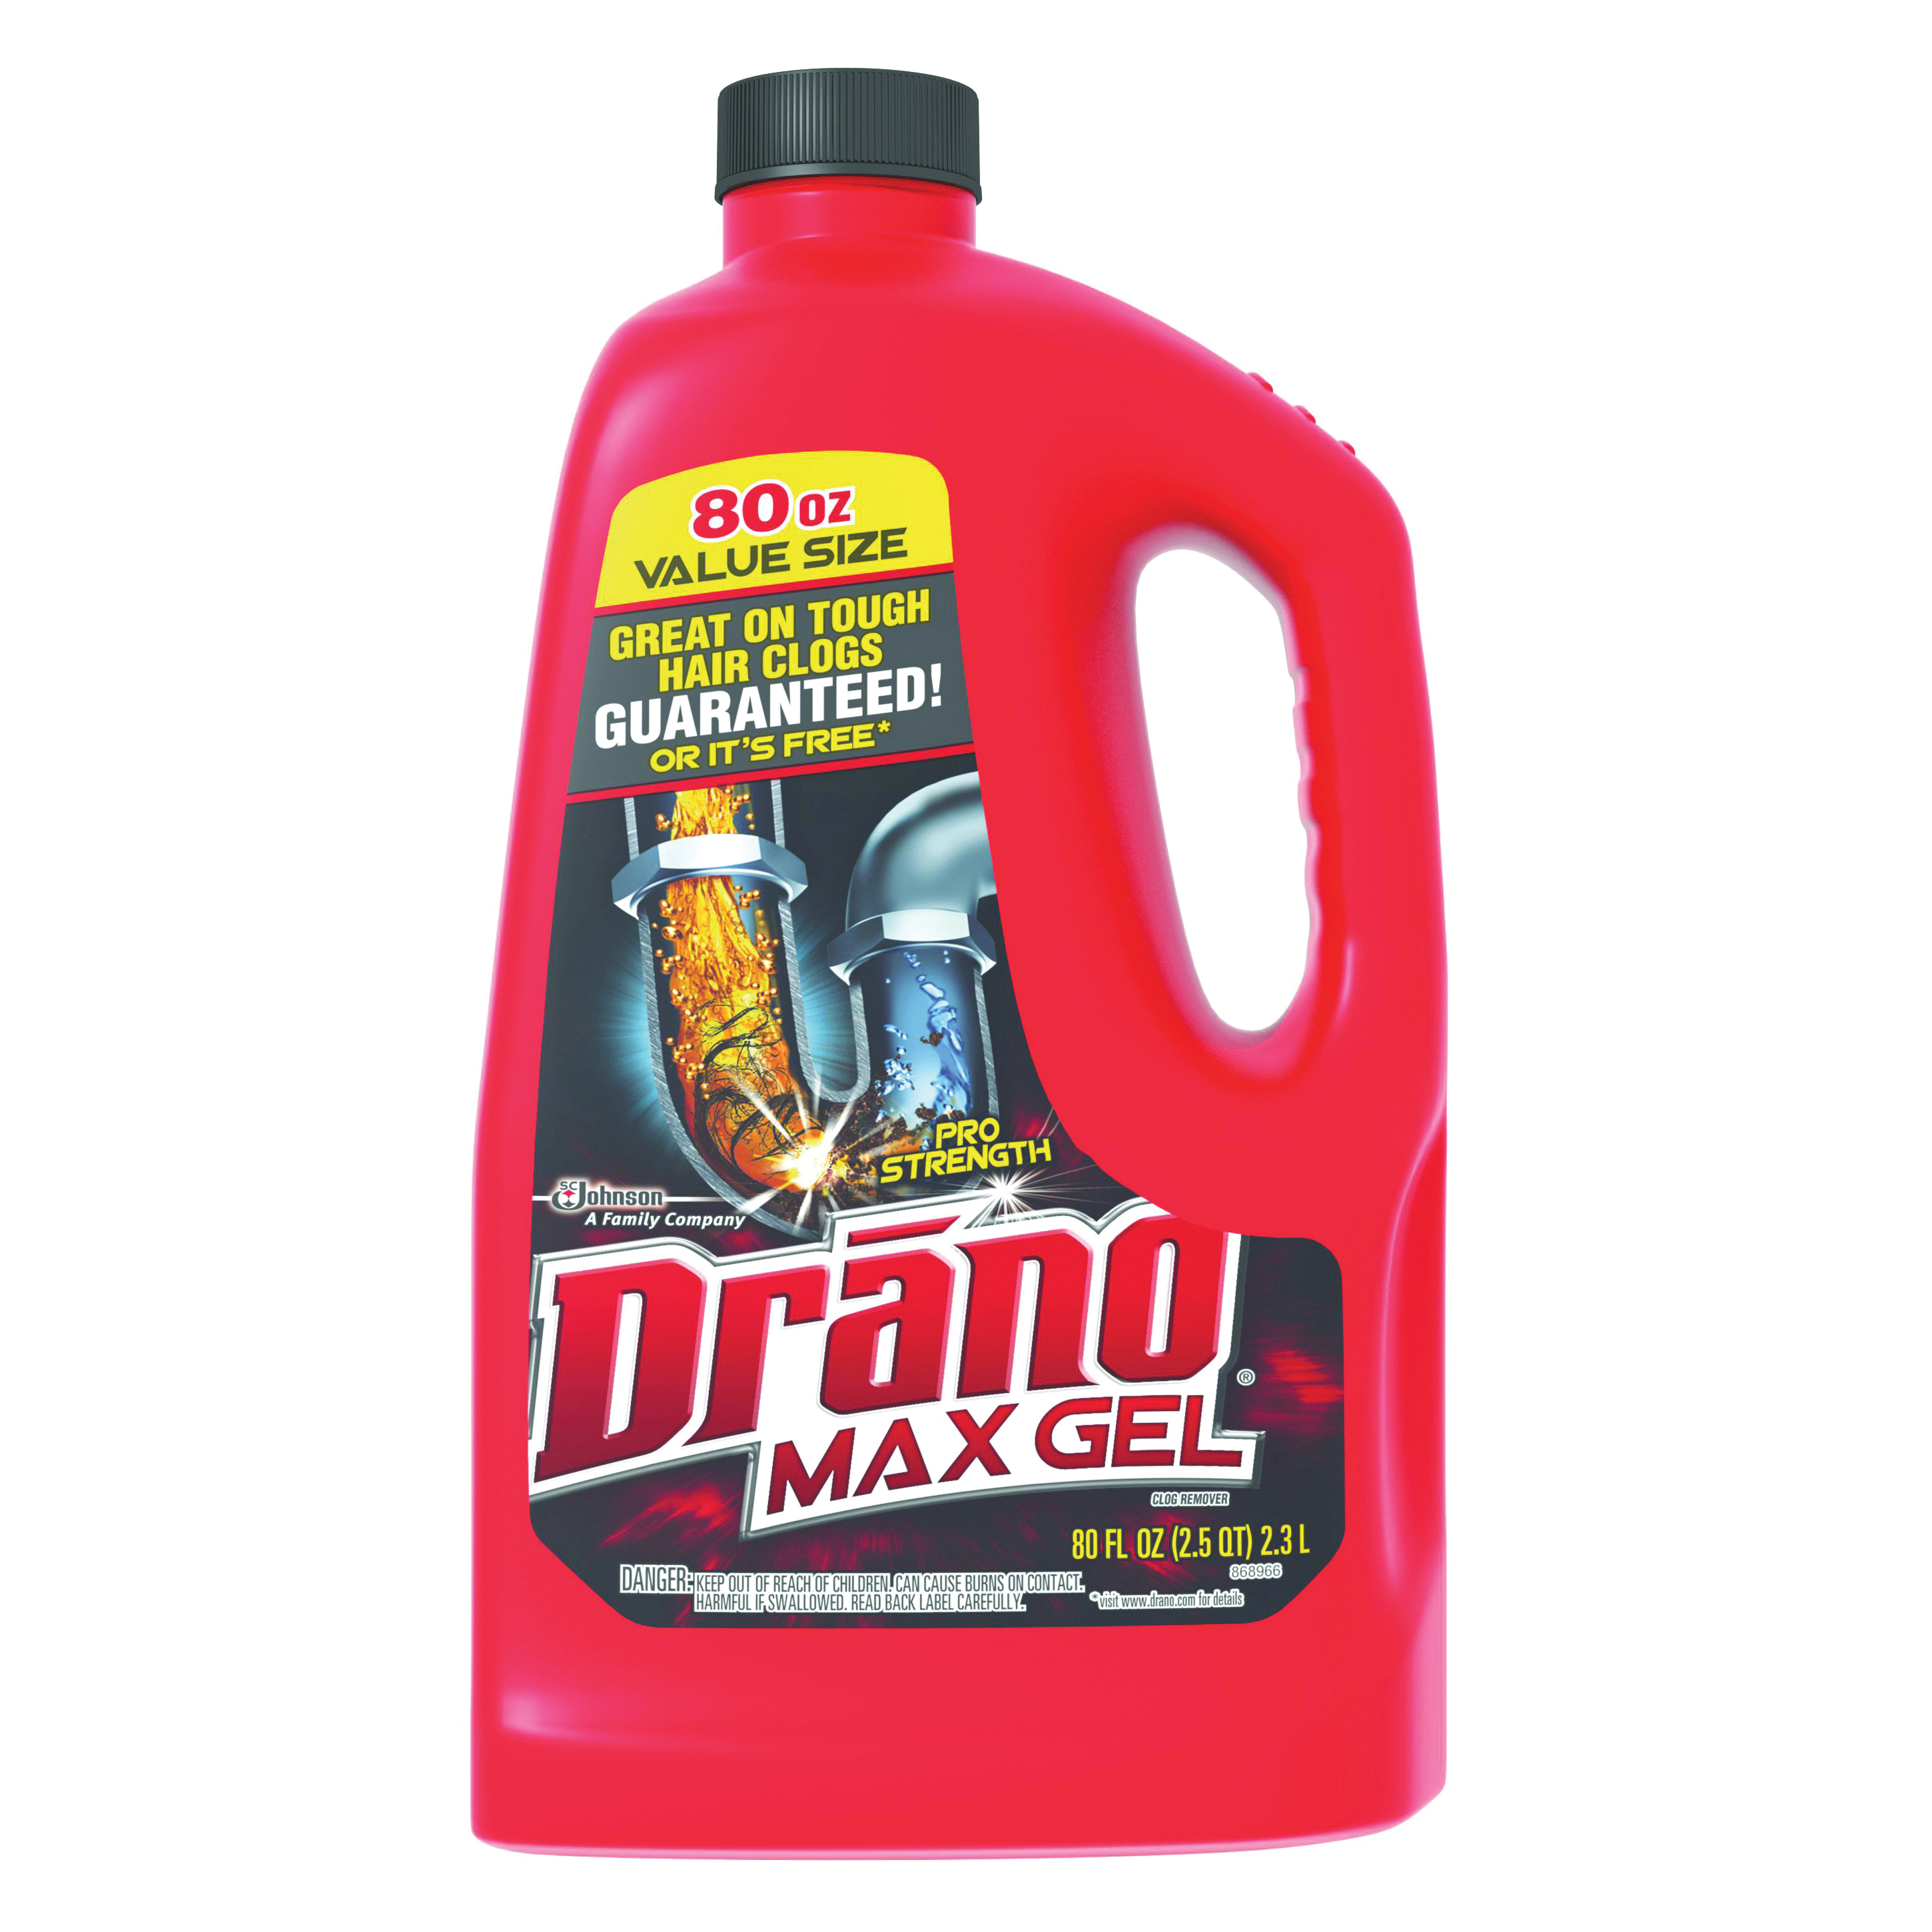 Drano Max Gel 40109 Clog Remover, Gel, Natural, Bleach, 80 oz Bottle - 1